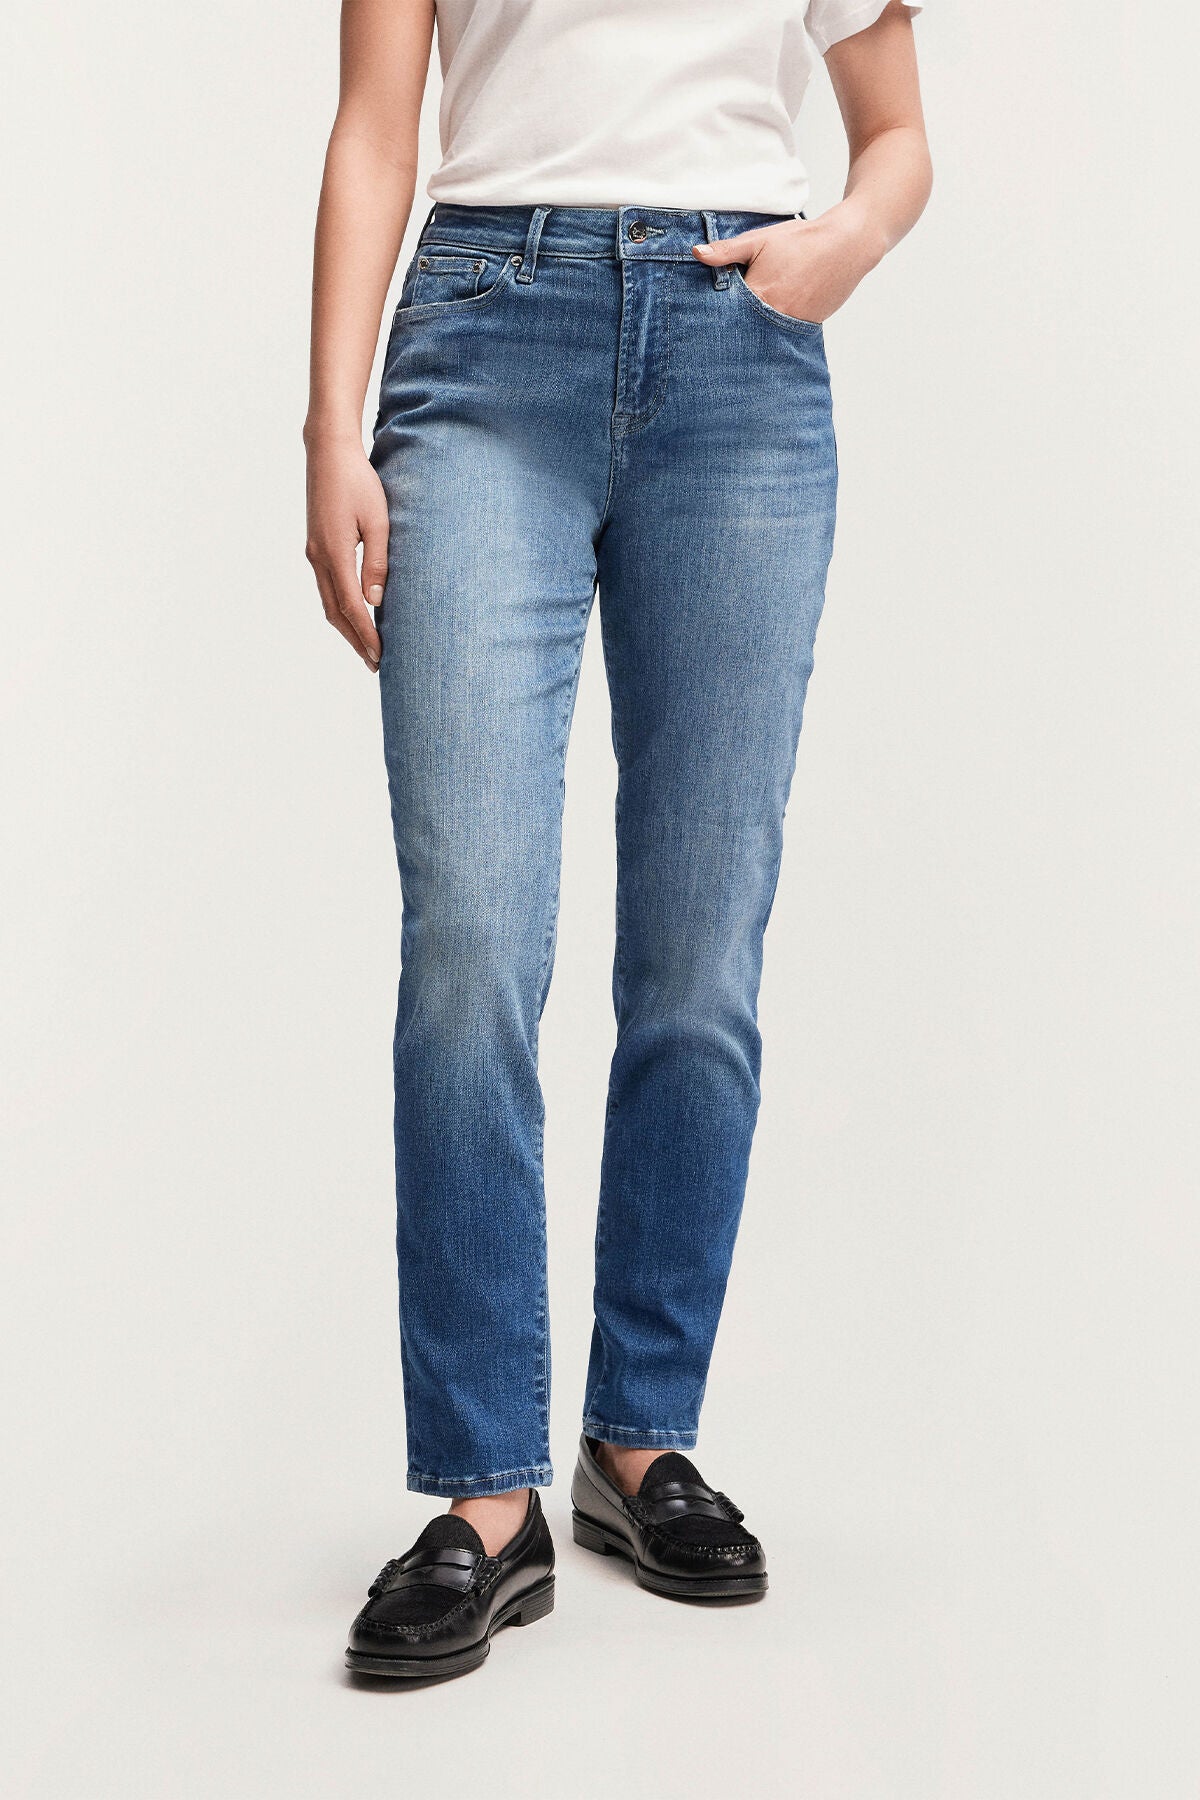 A woman wearing Denham MARGOT High Slim - Light Worn Indigo blue jeans.